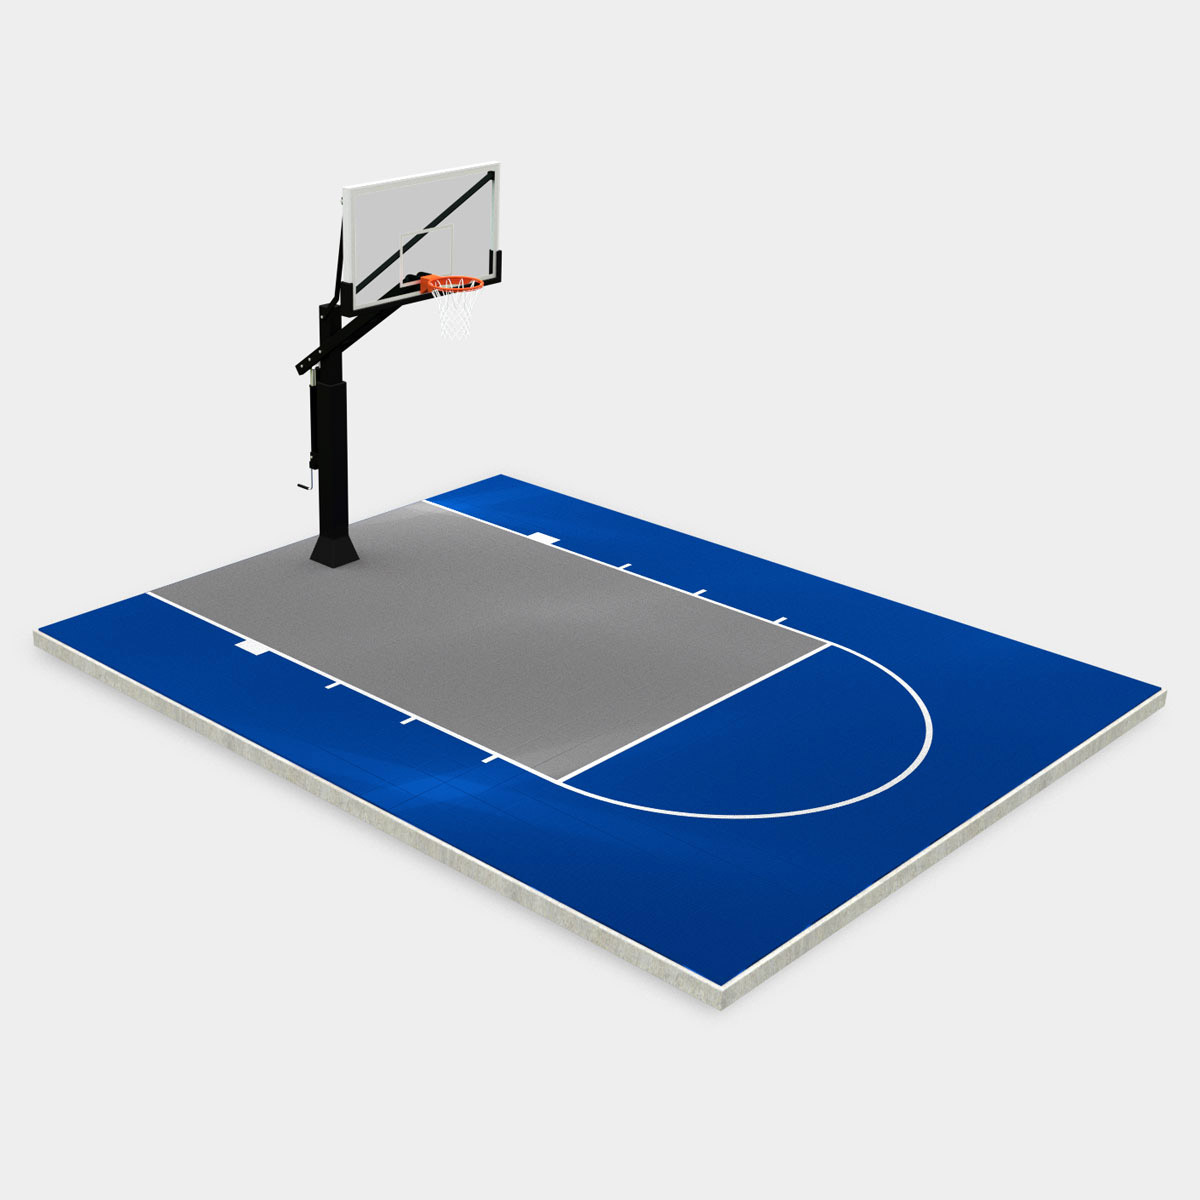 ik ben gelukkig overtuigen bijzonder 20' x 25' Basketball Court - DunkStar DIY Basketball Courts